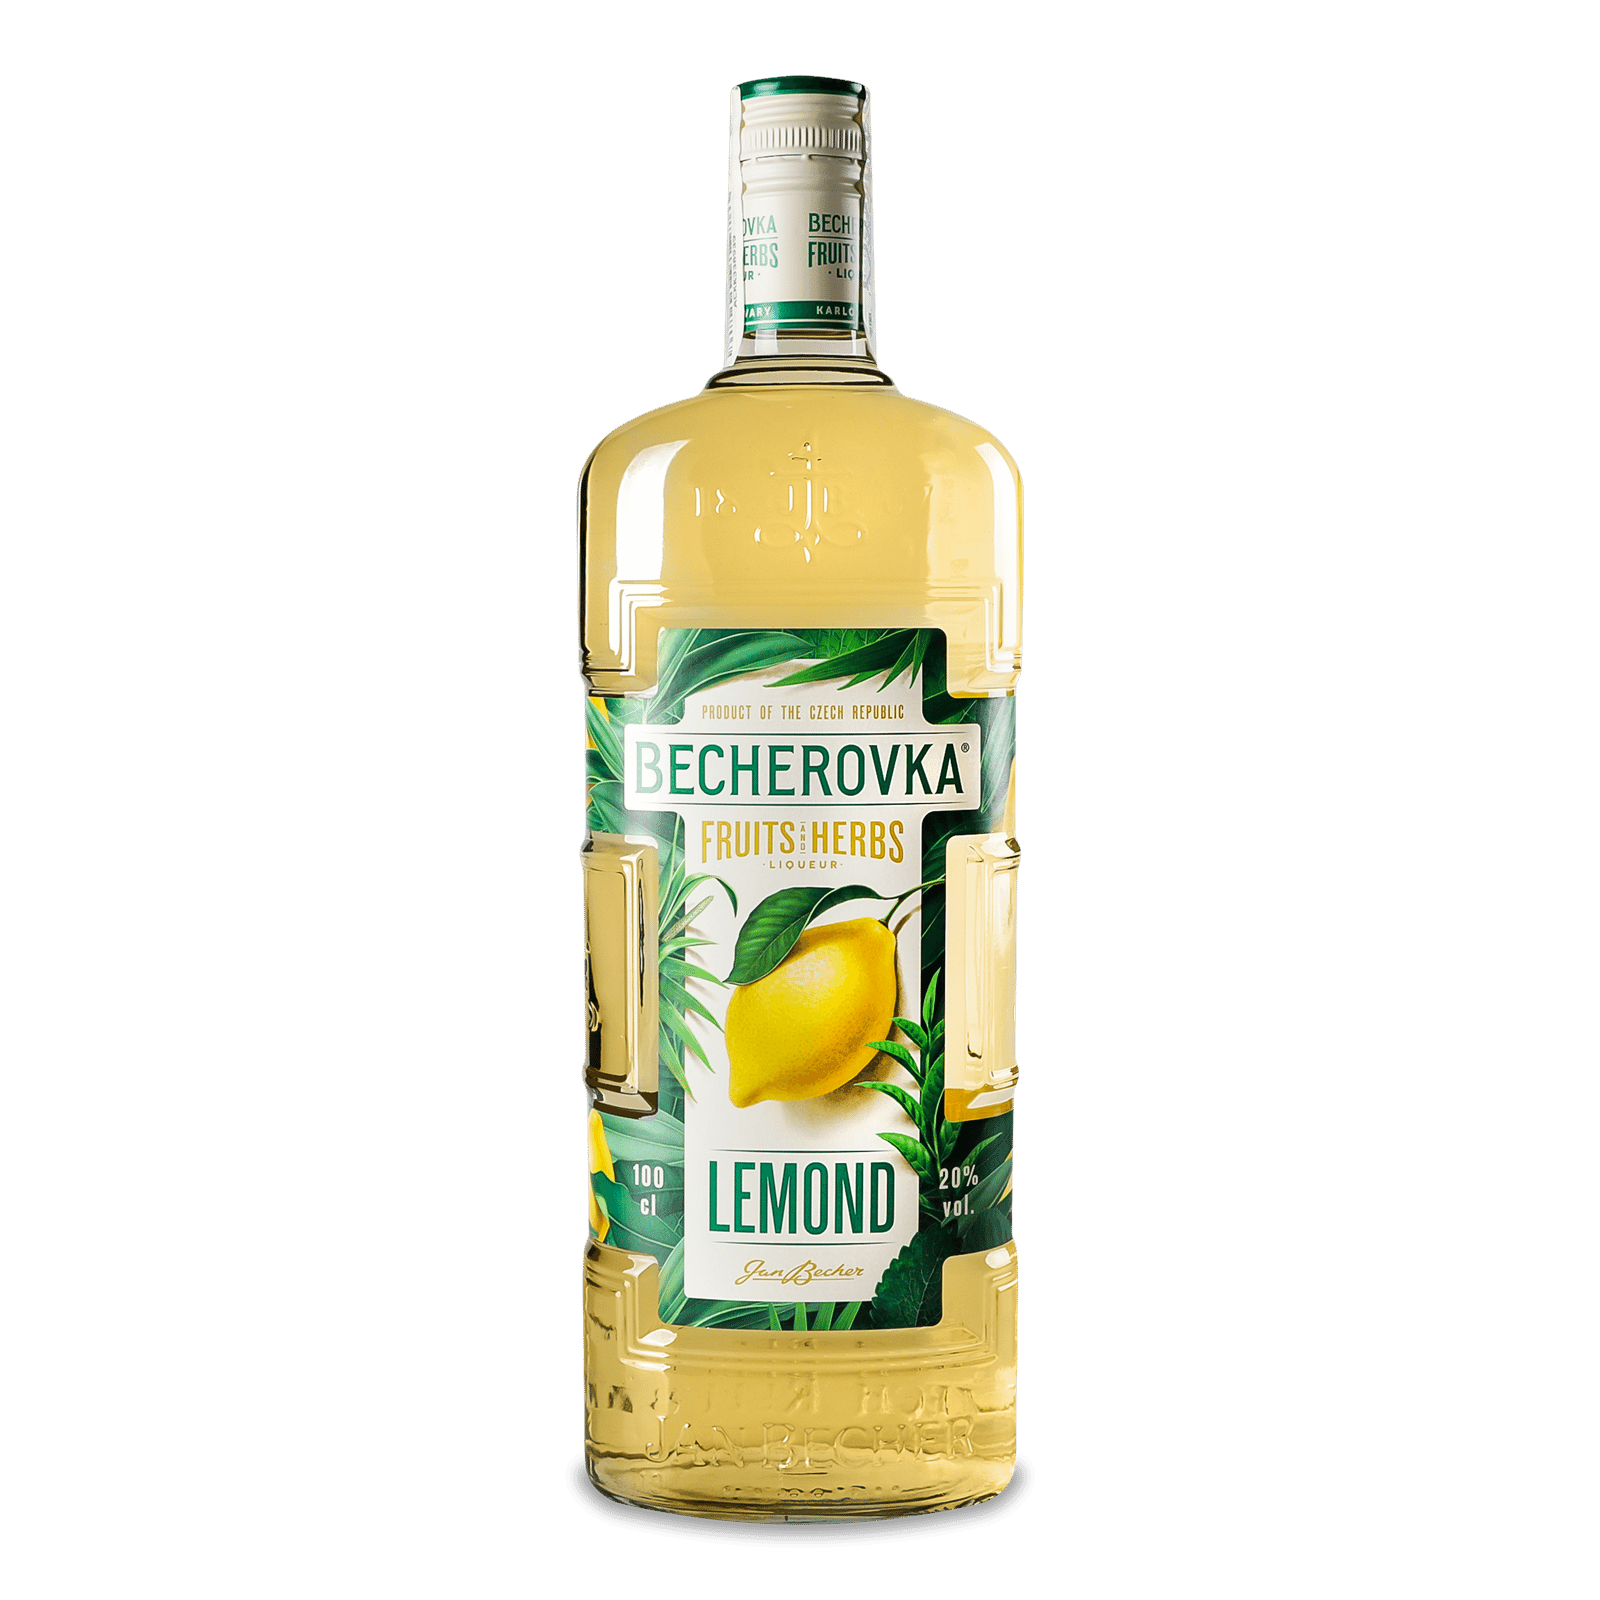 Настоянка Becherovka Lemond 20% - 1